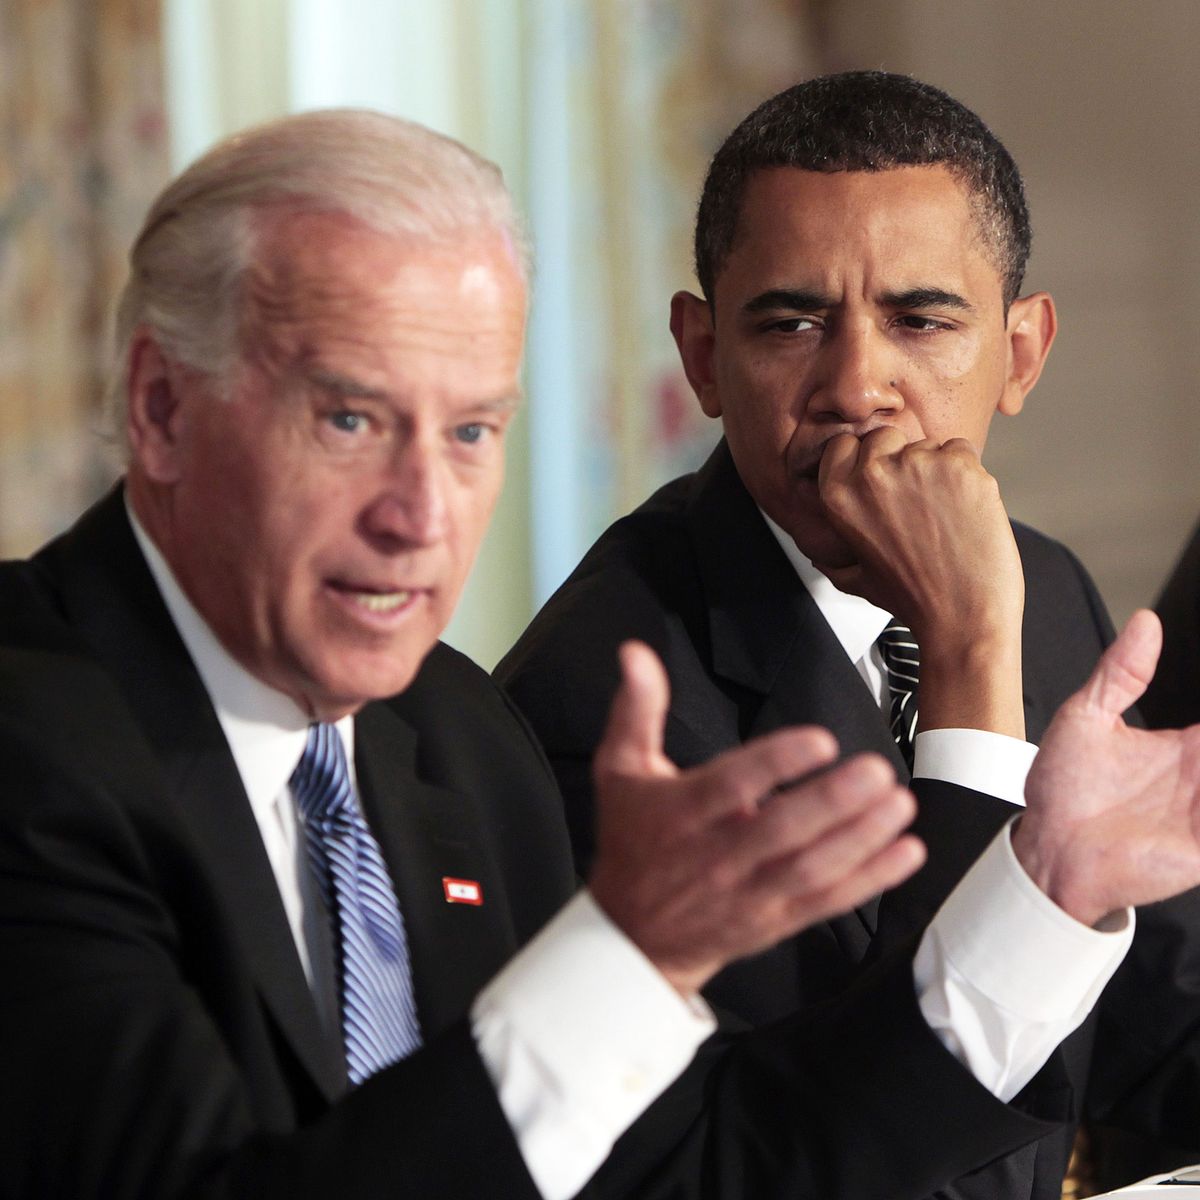 Biden Needs to Understand and Avoid Obama's Failures in 2009